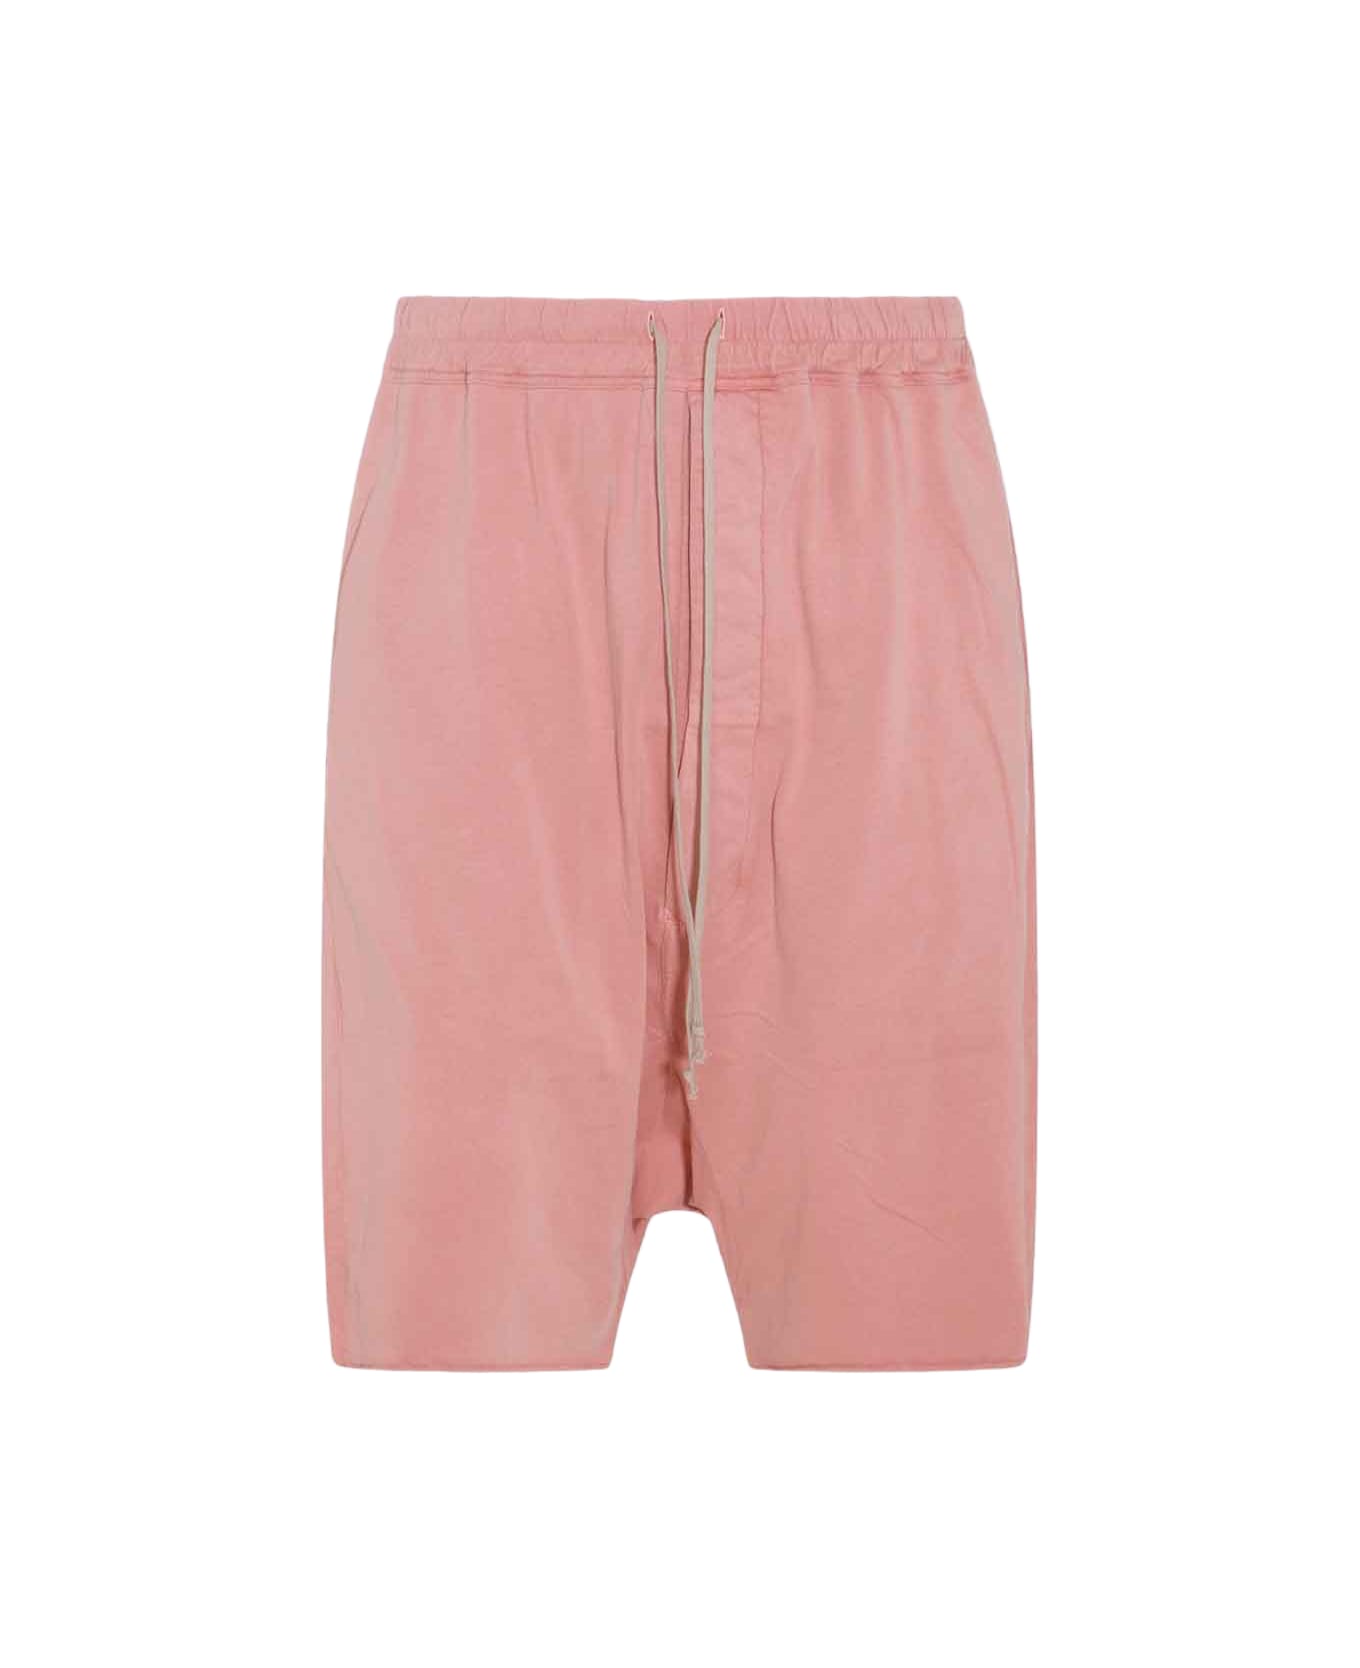 DRKSHDW Pink Cotton Shorts - Pink ショートパンツ